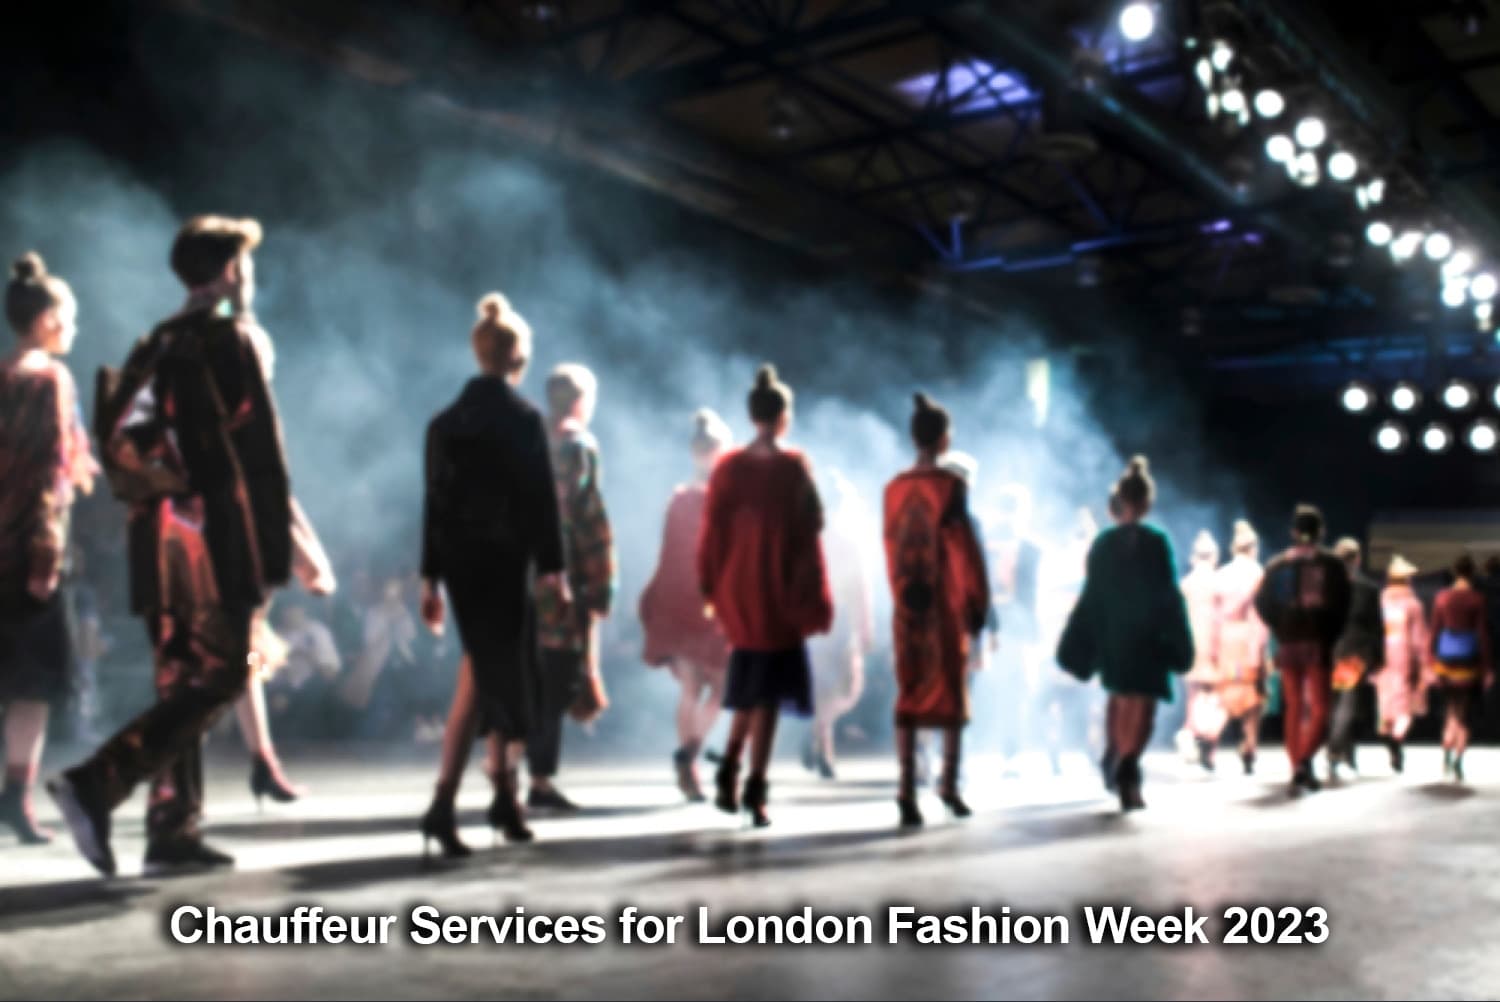 Chauffeur Services for London Fashion Week 2023